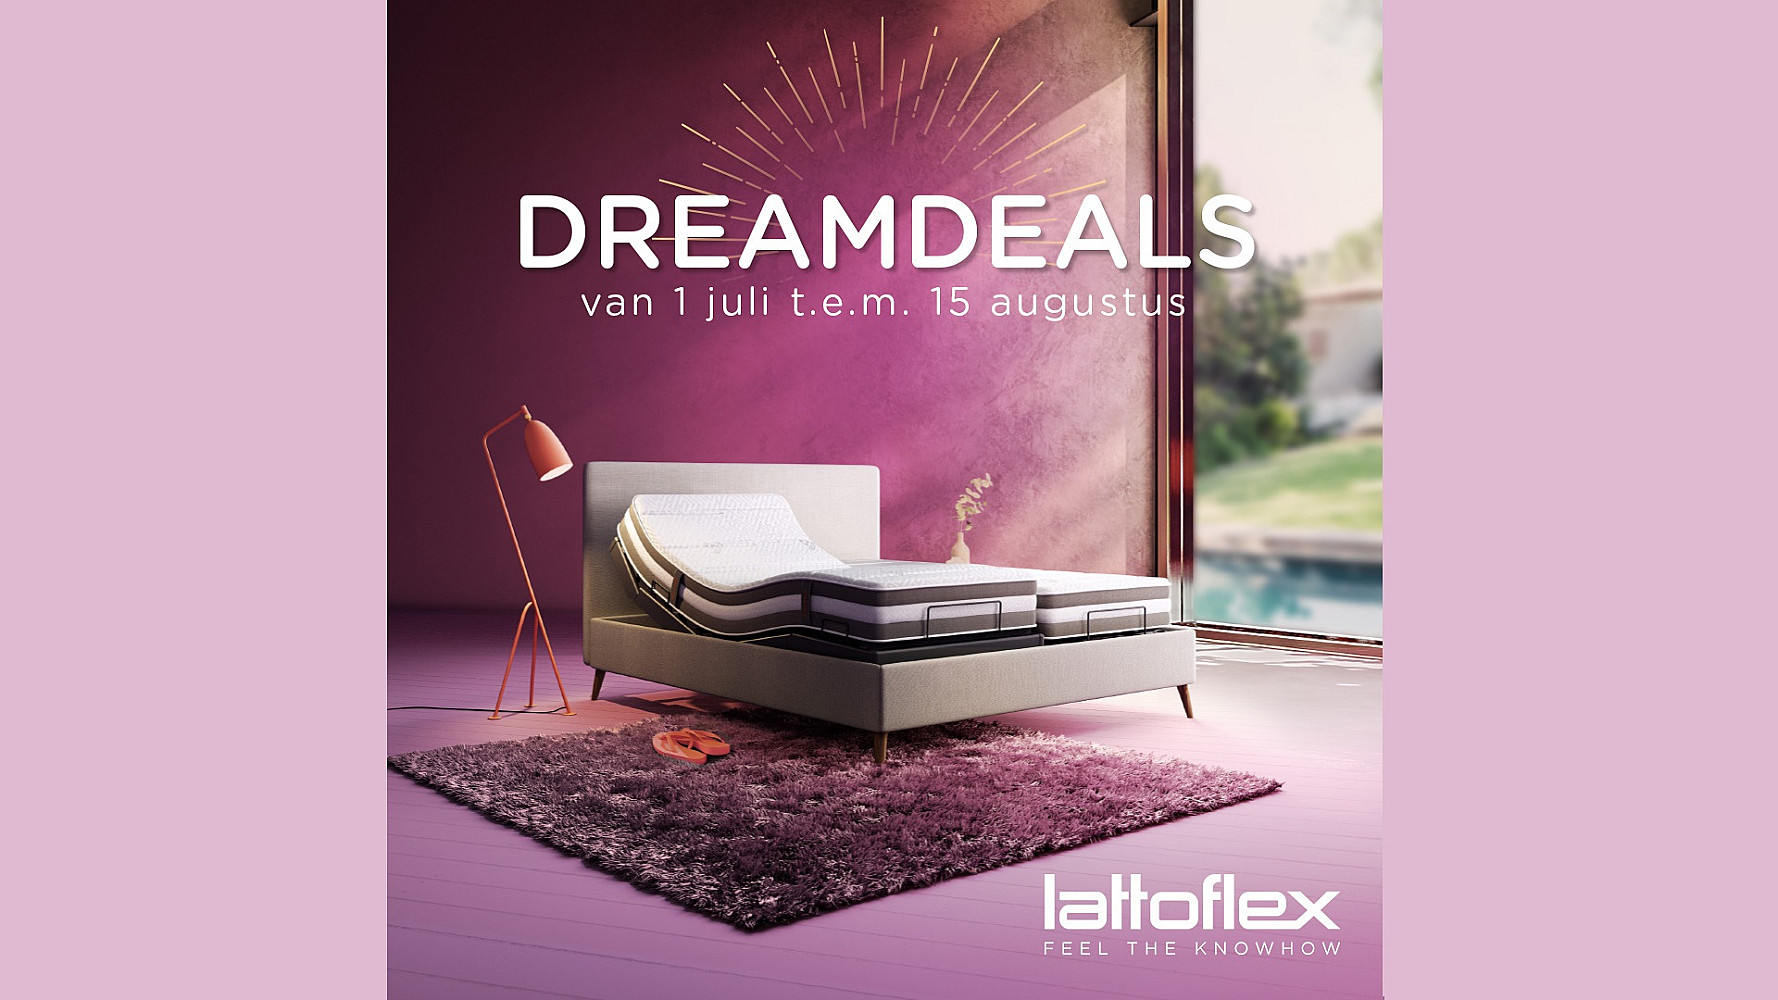 Lattoflex Dreamdeals afbeelding